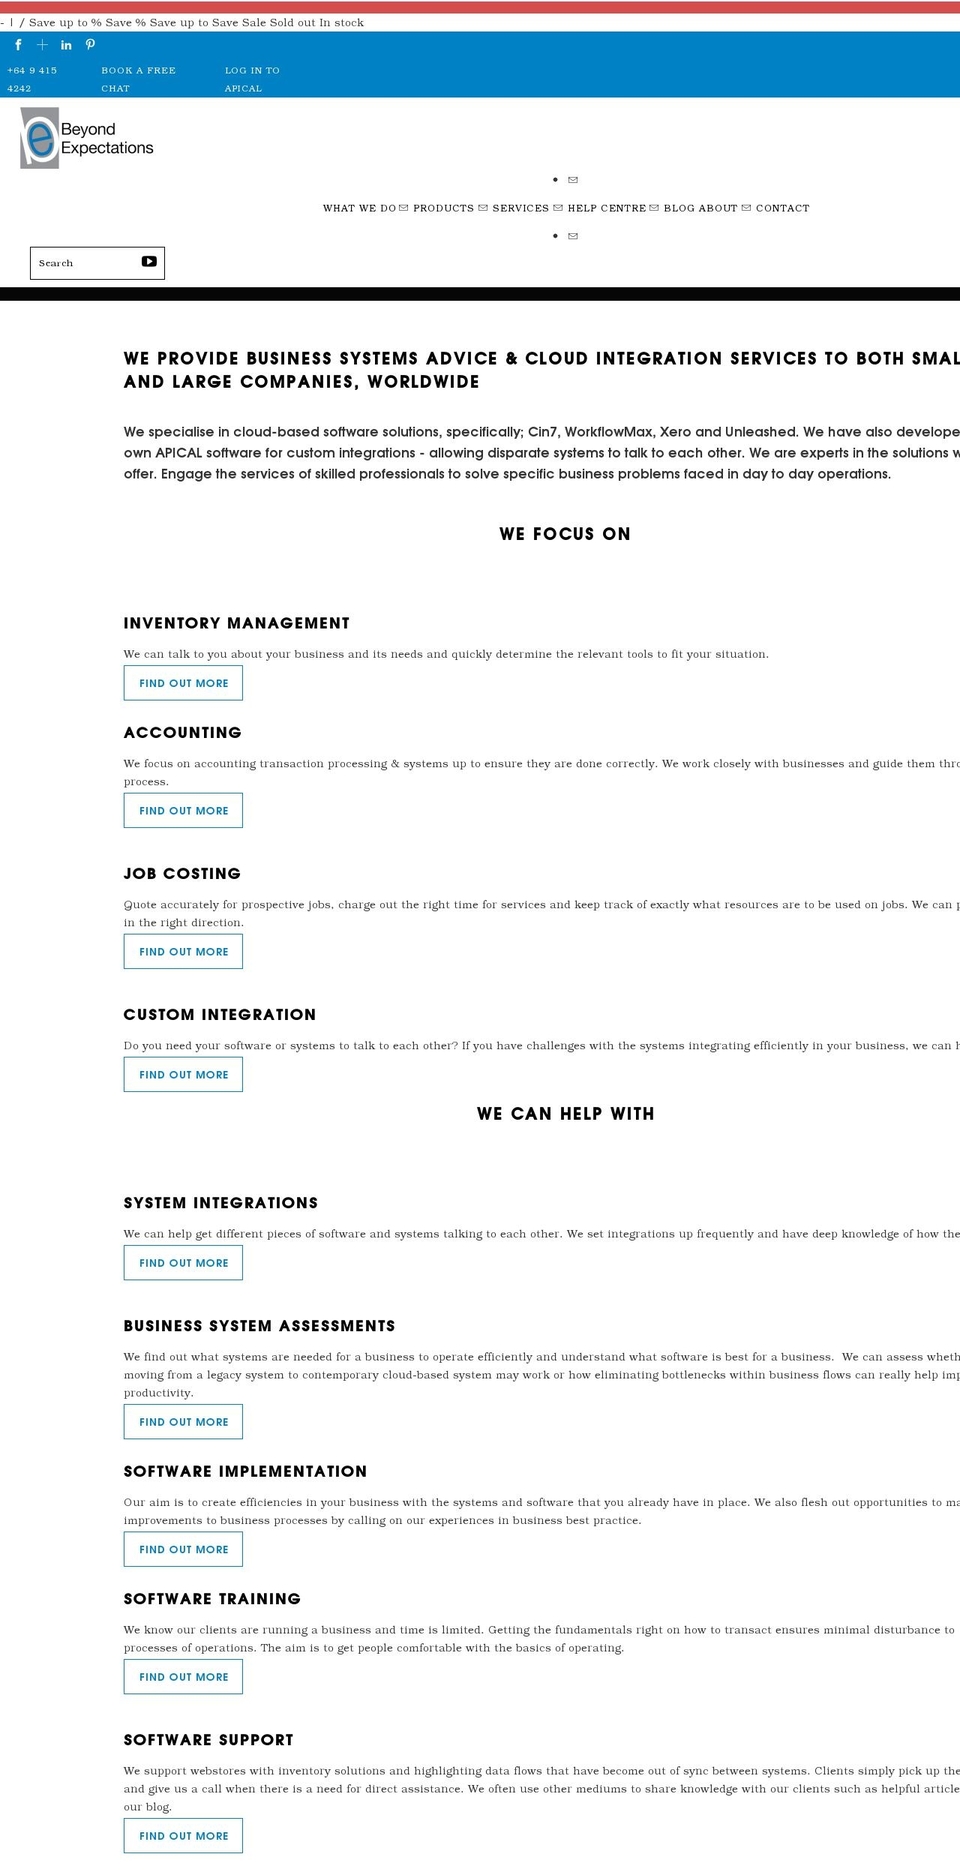 beyondexpectations.co.nz shopify website screenshot